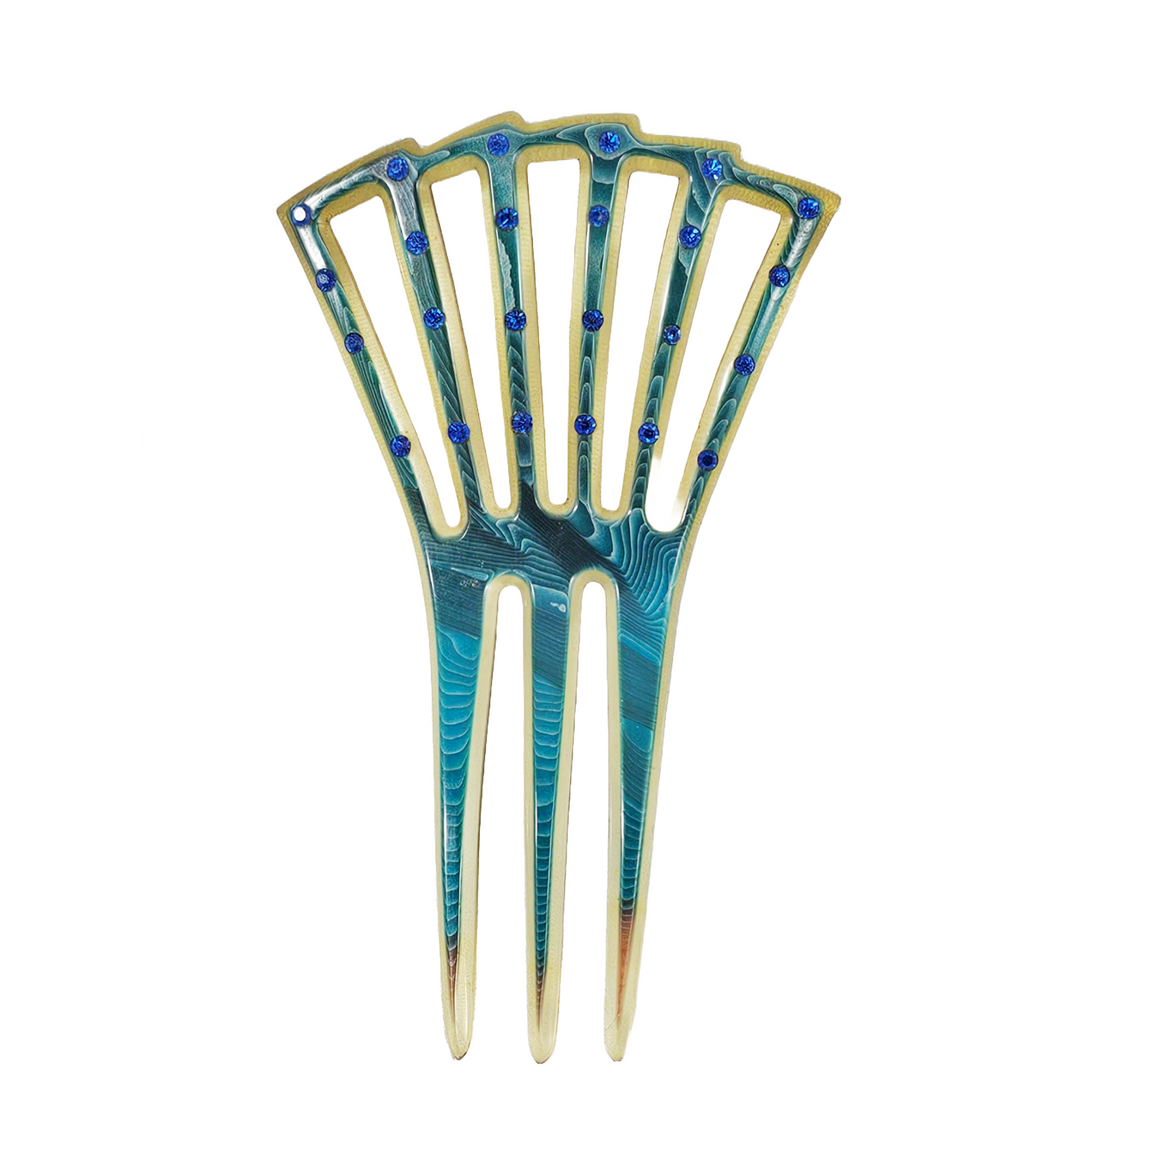 Art Deco Celluloid Hair Comb Teal Blue Sapphire Rhinestones Antique Fashion Accessory